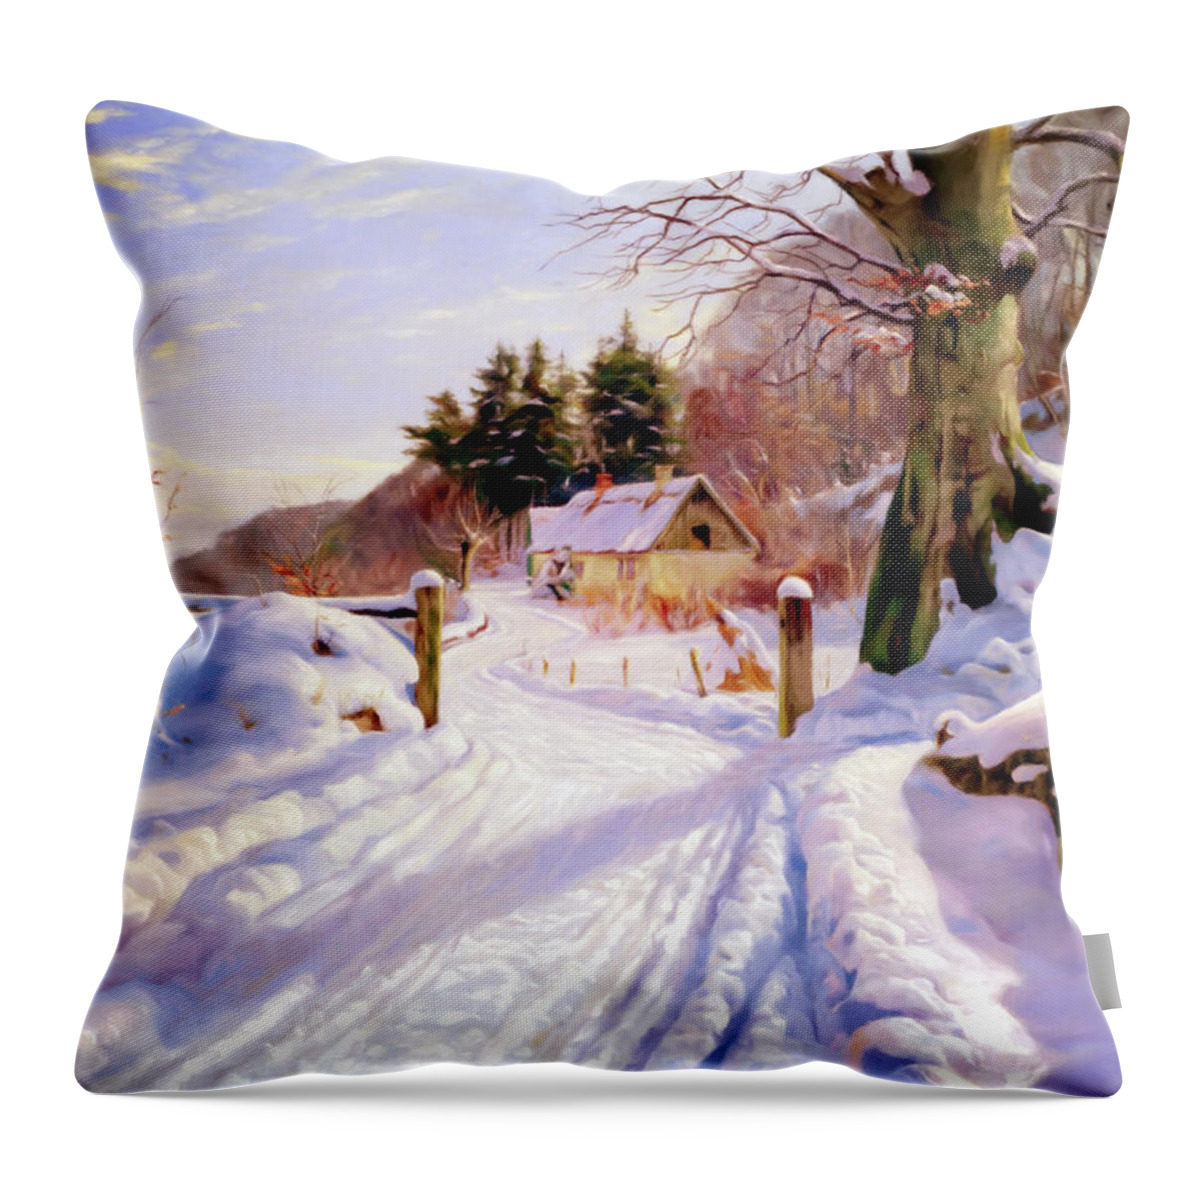 Winter Snow Glow Throw Pillow featuring the mixed media Winter Snow Glow by Georgiana Romanovna